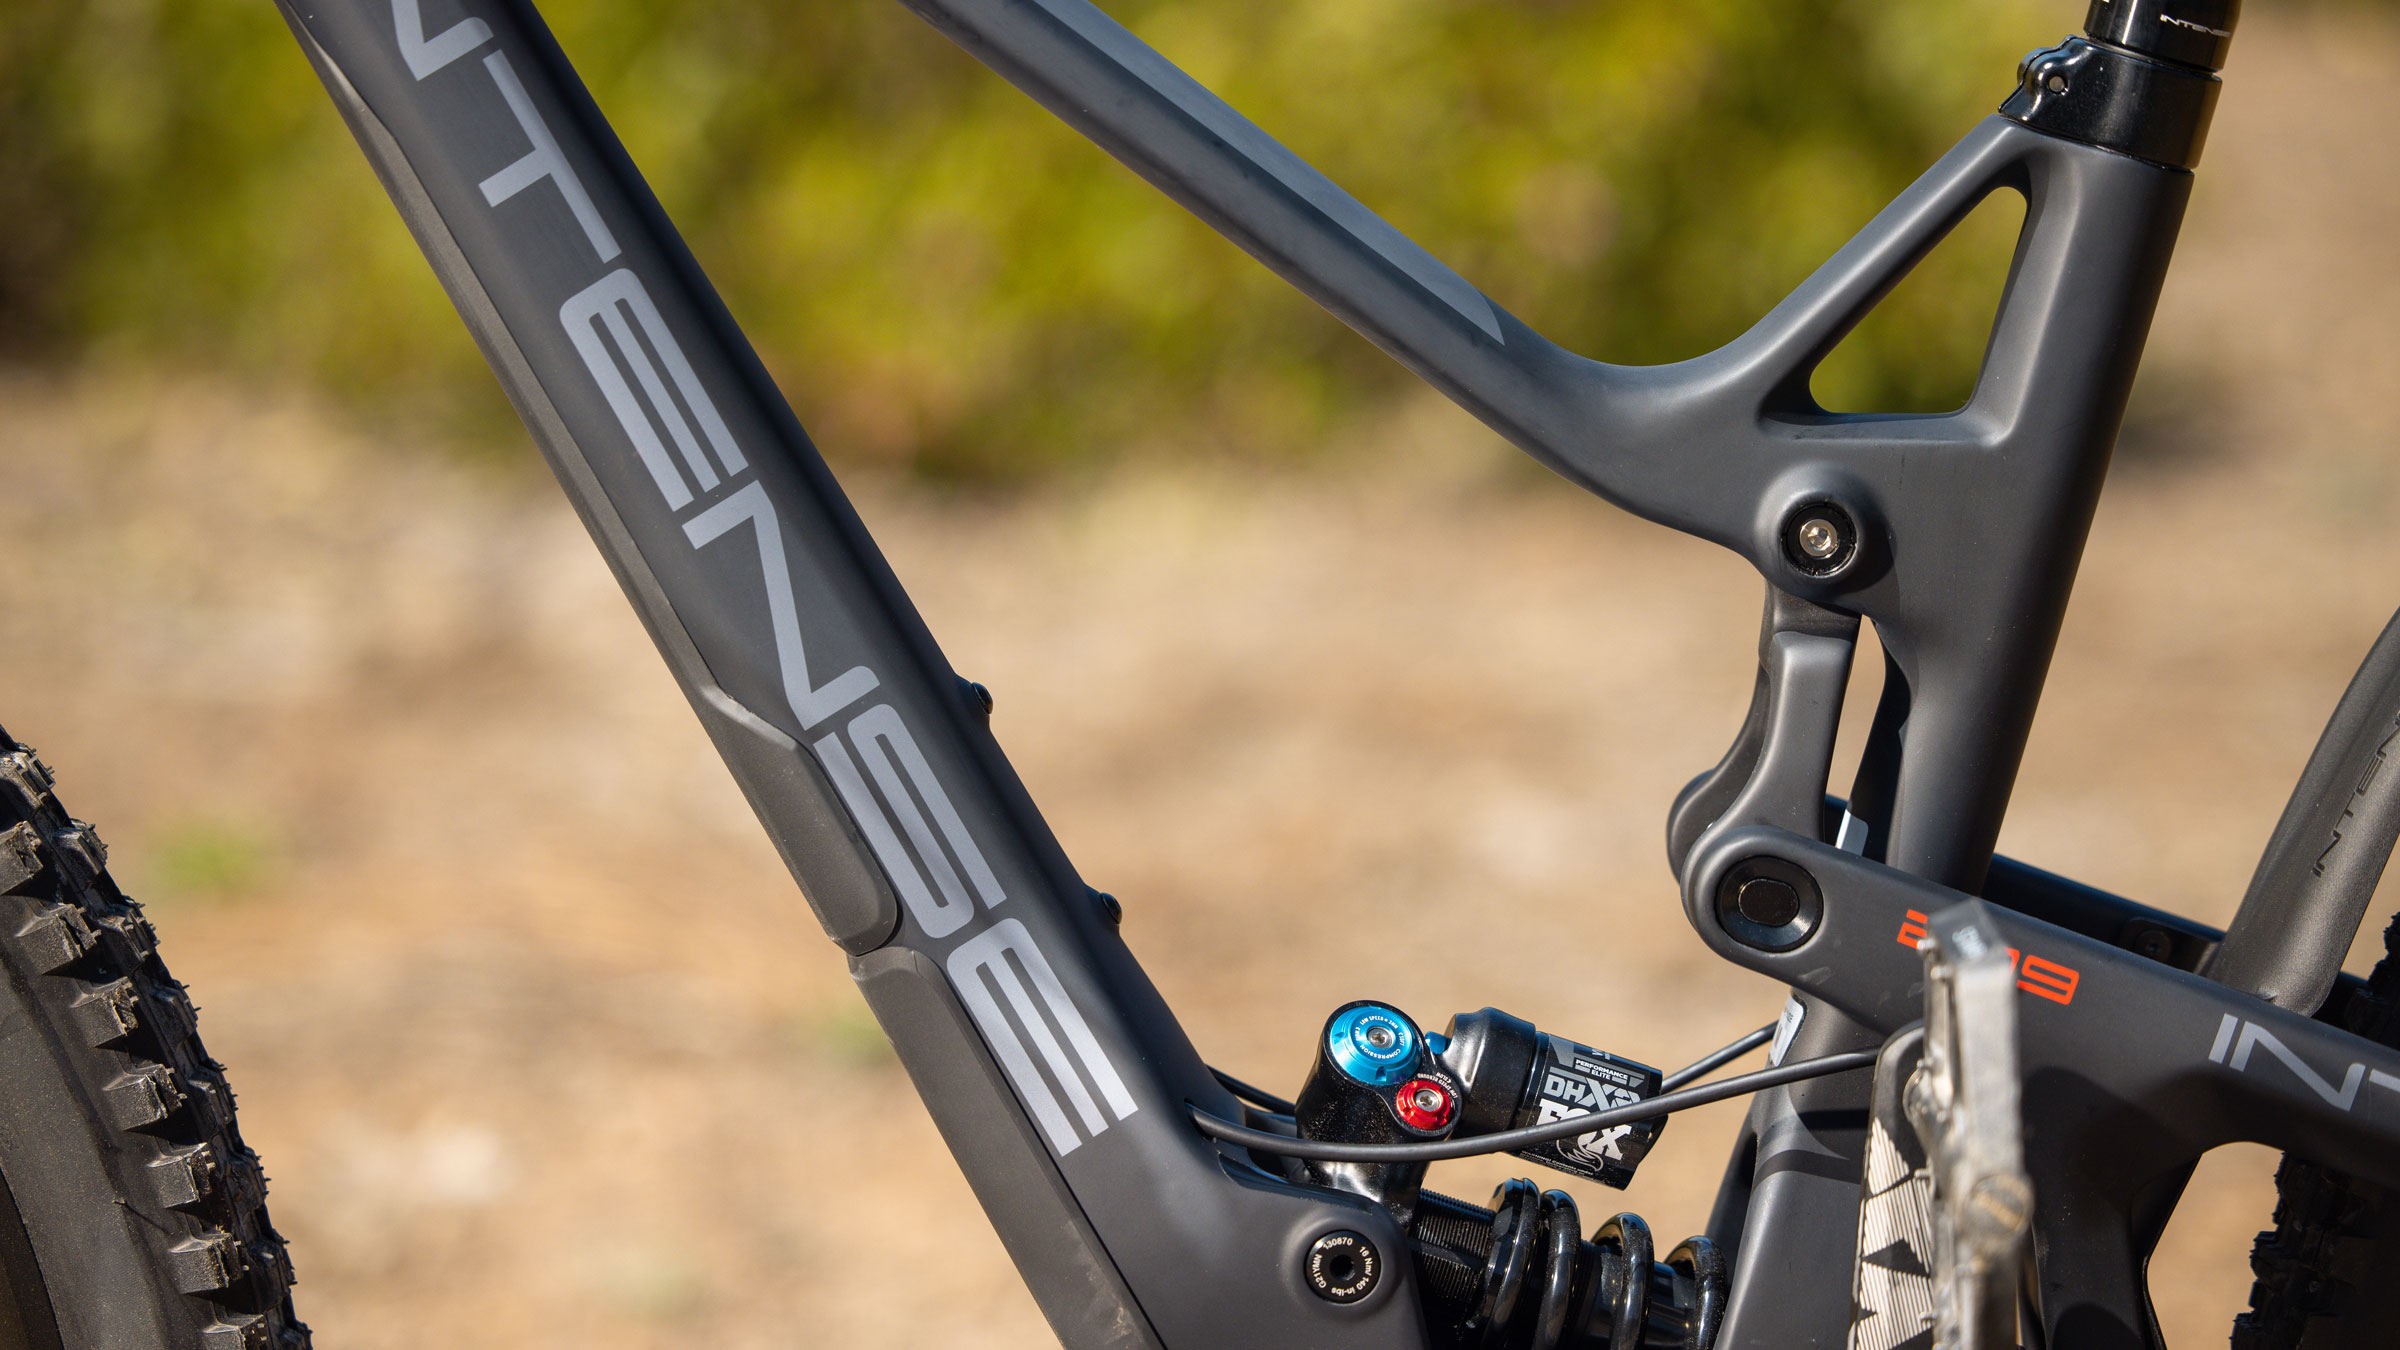 Close up of a mountain bike frame, grey bike with intense branding